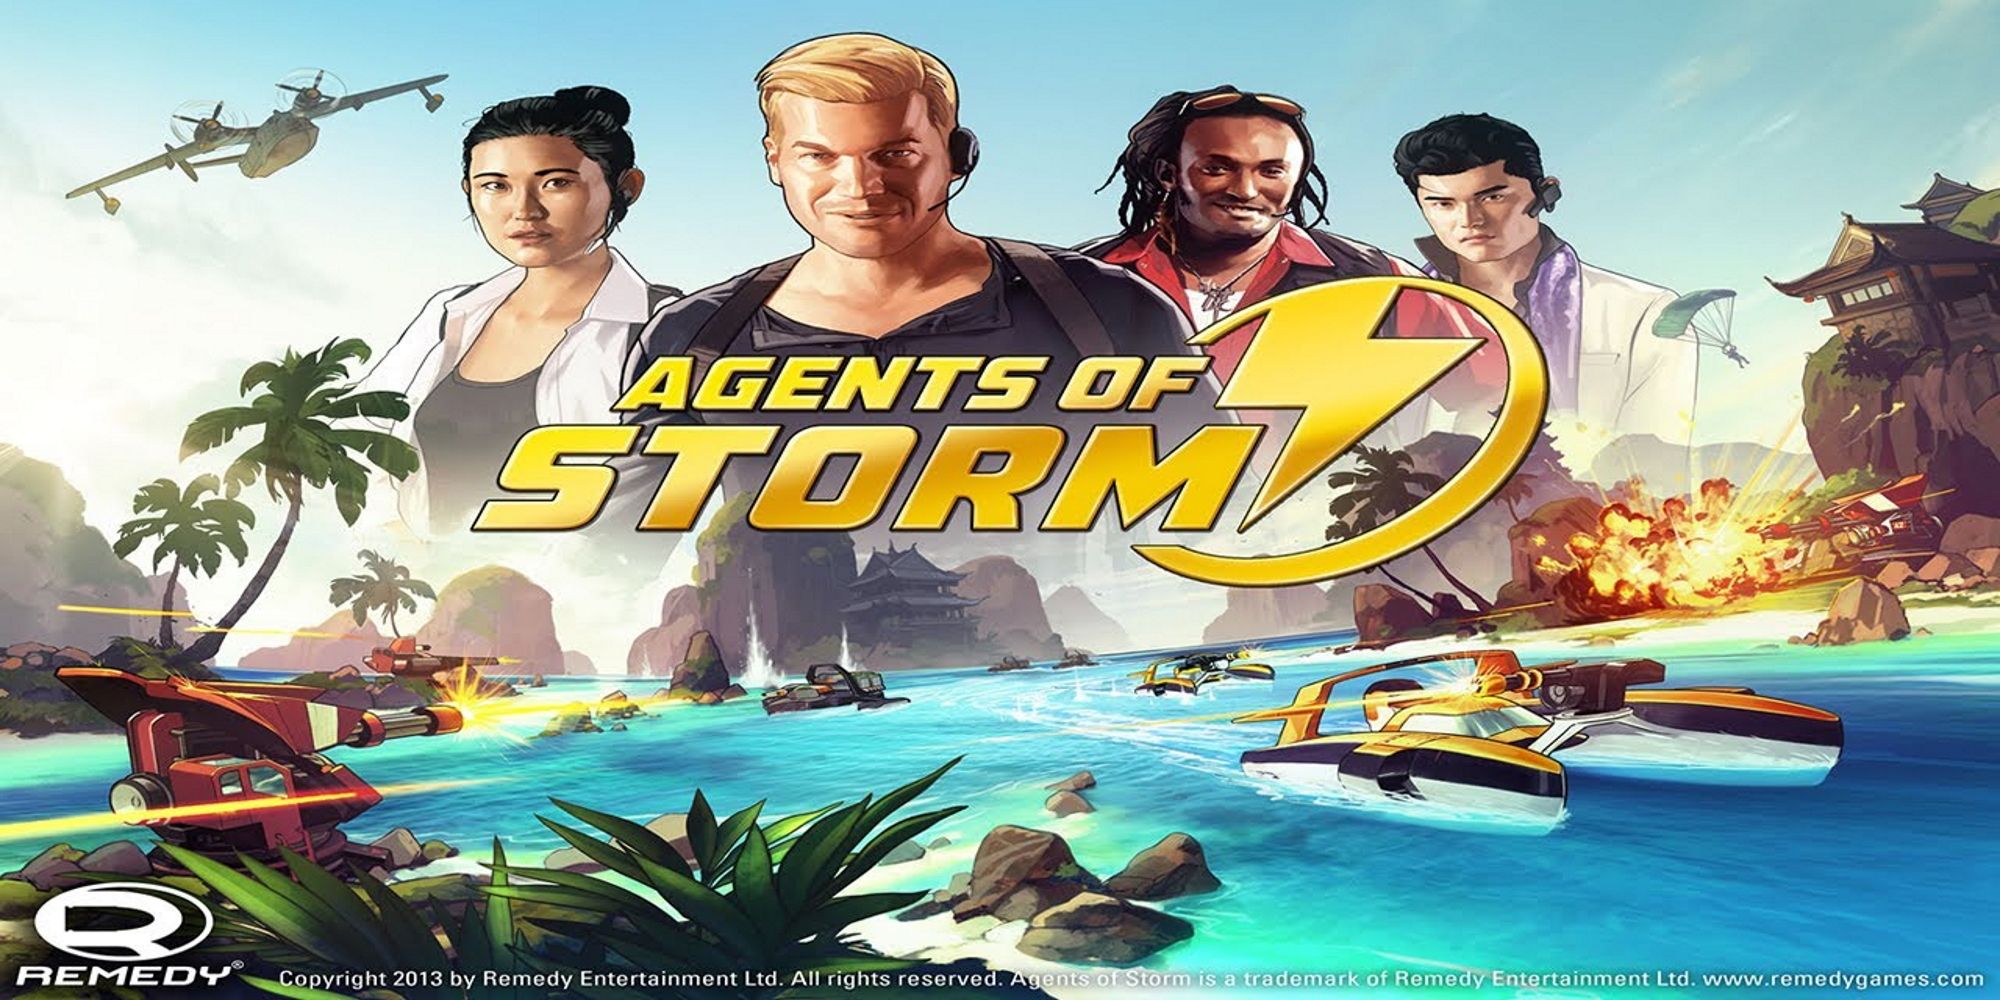 Jokainen peli: Remedy Entertainment, Ranked Agents Of Storm